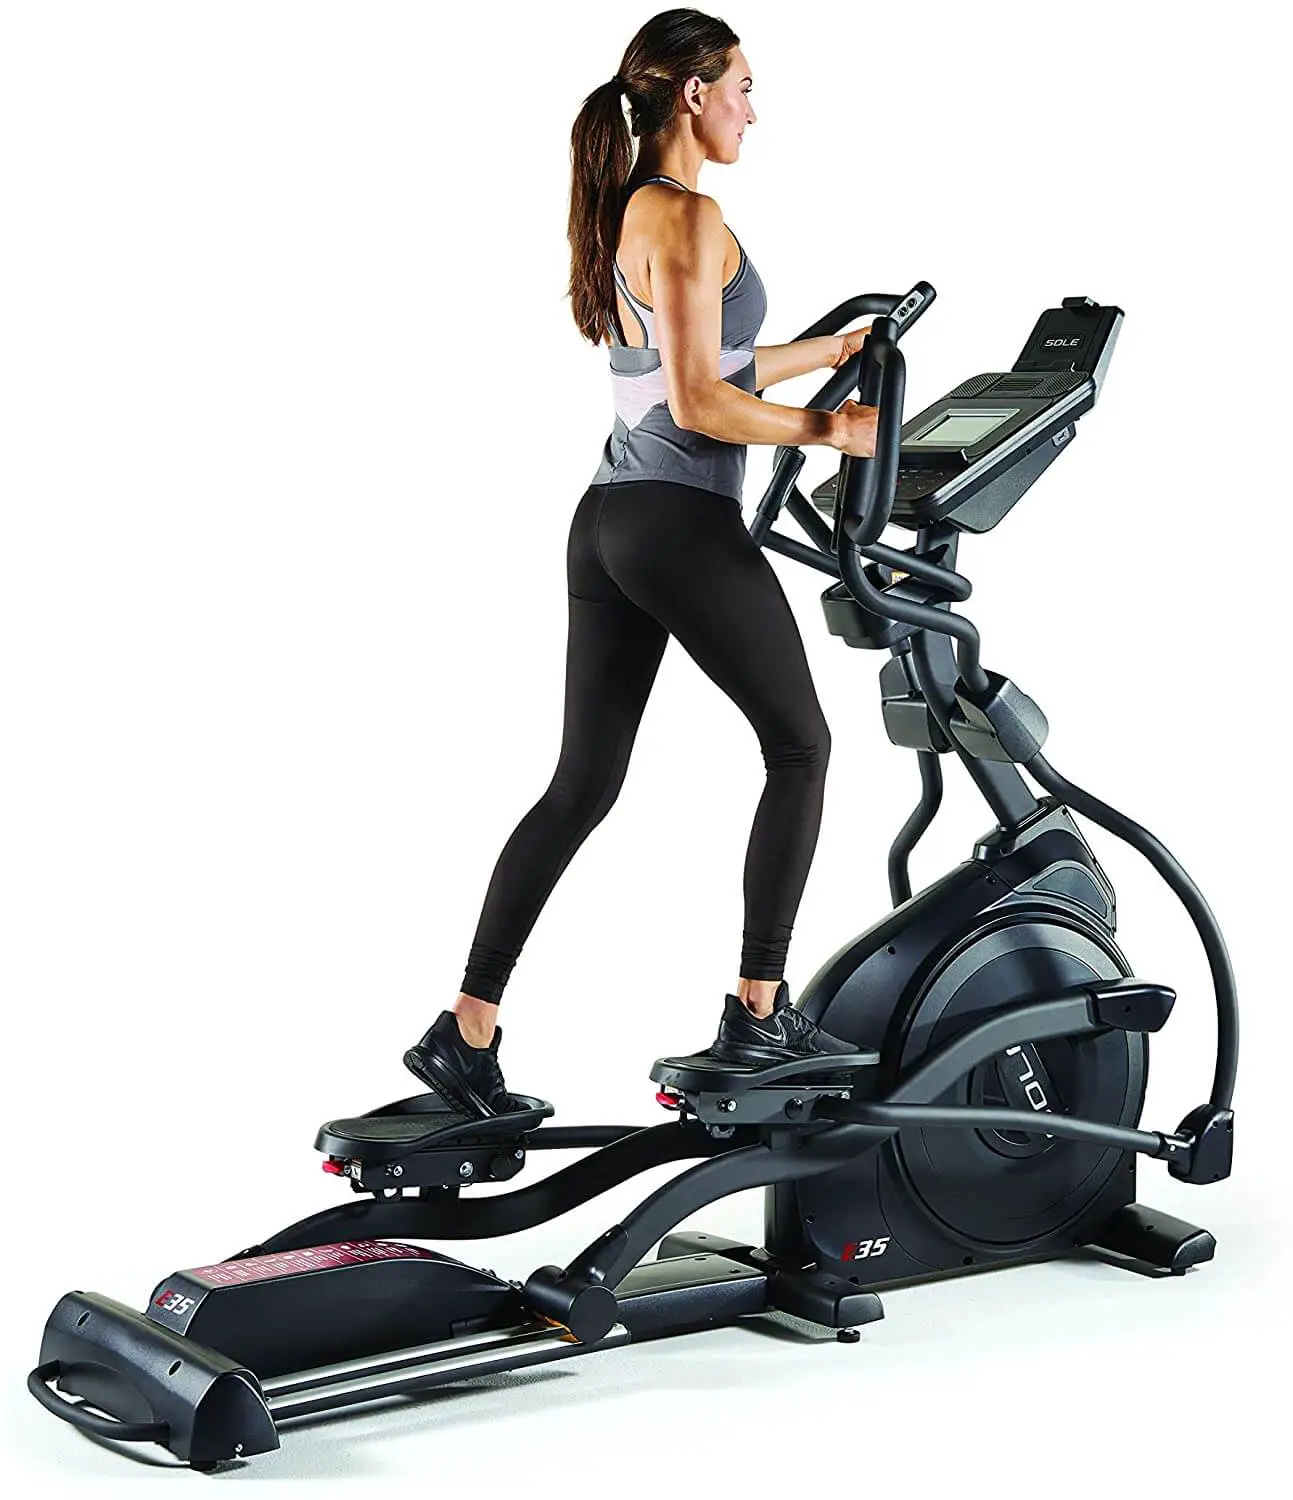 Elliptical Bike Vs Treadmill